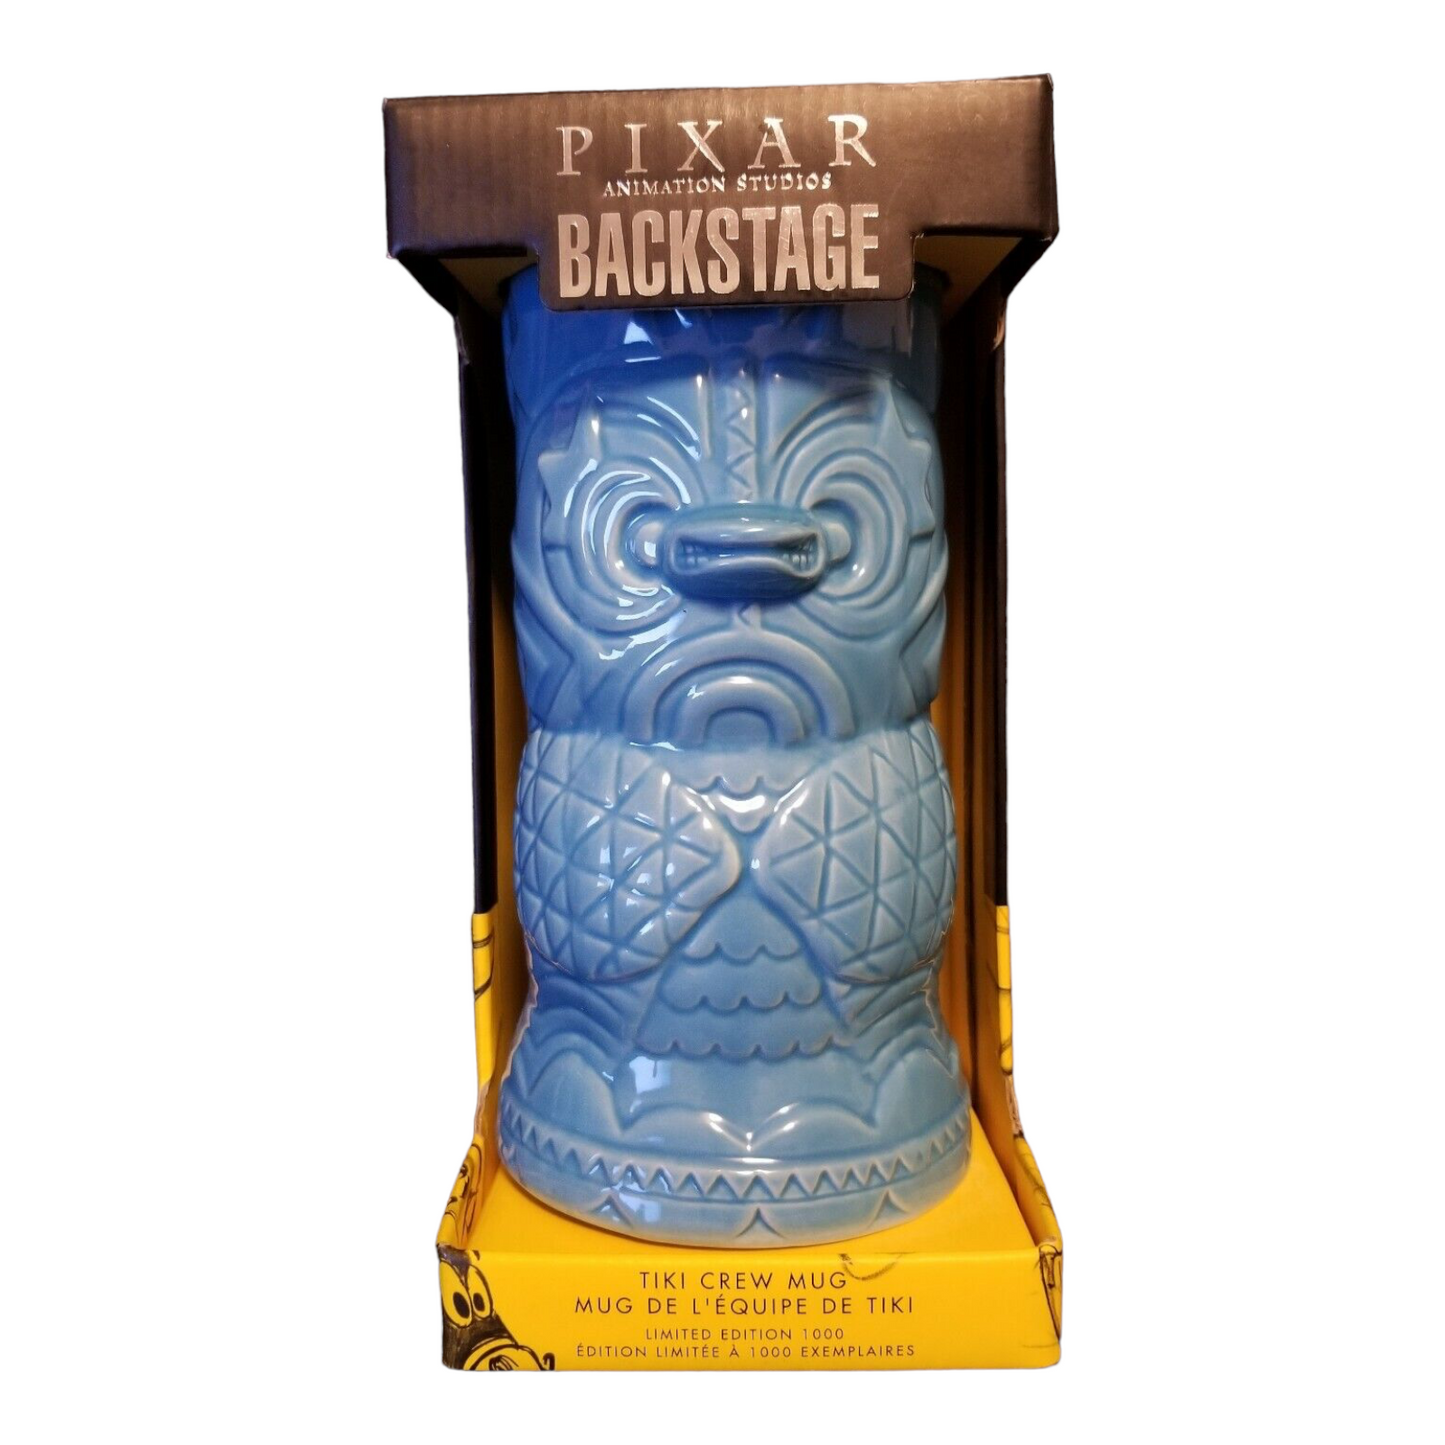 Ducky and Bunny Pixar Backstage Tiki Crew Mug Limited Edition - D23 Expo 2019 Exclusive